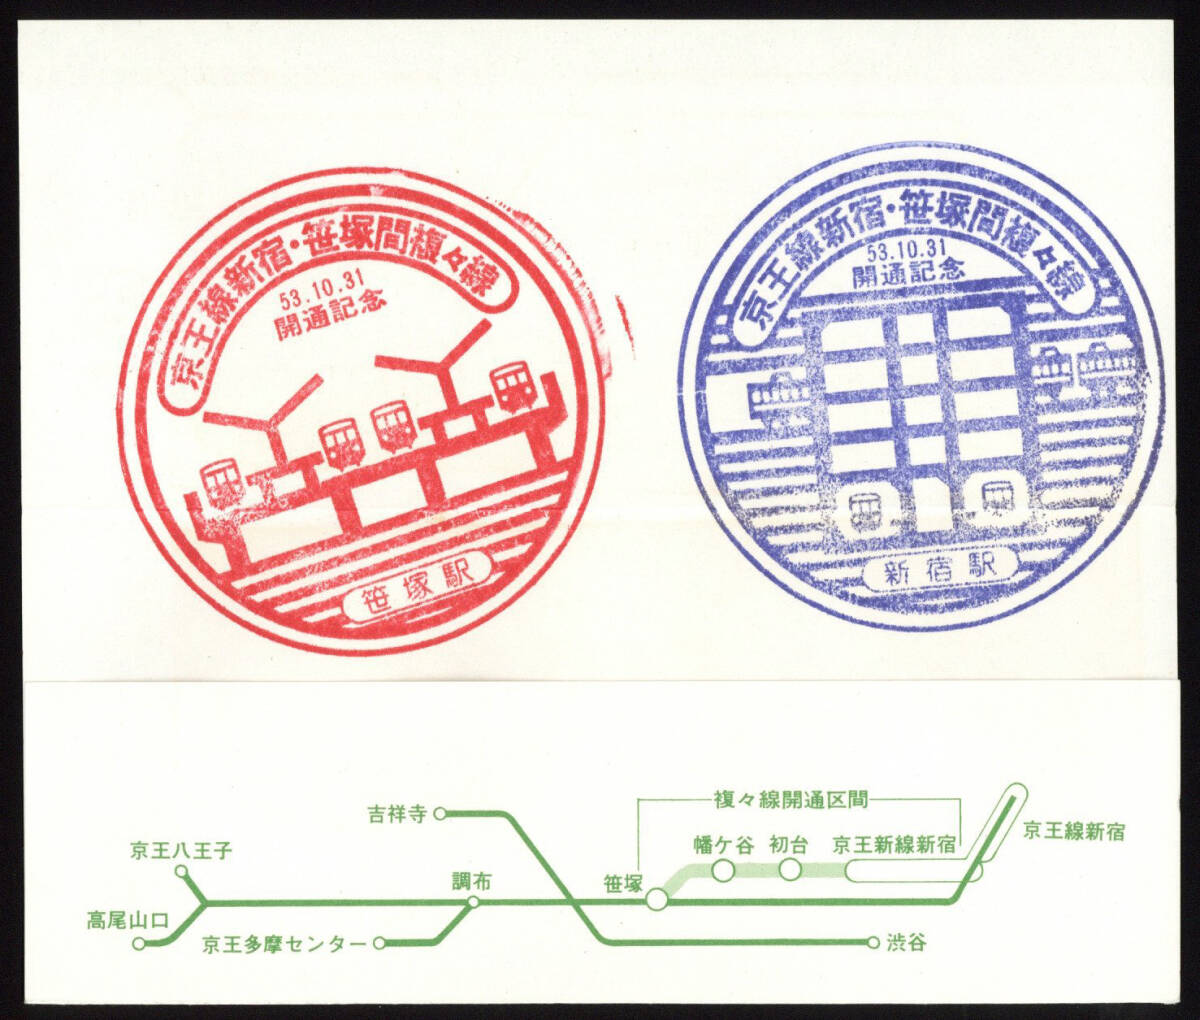 S53 京王帝都電鉄 新宿-笹塚間 複々線開通記念乗車券 記念スタンプ押印 15セット （146ｇ）の画像4